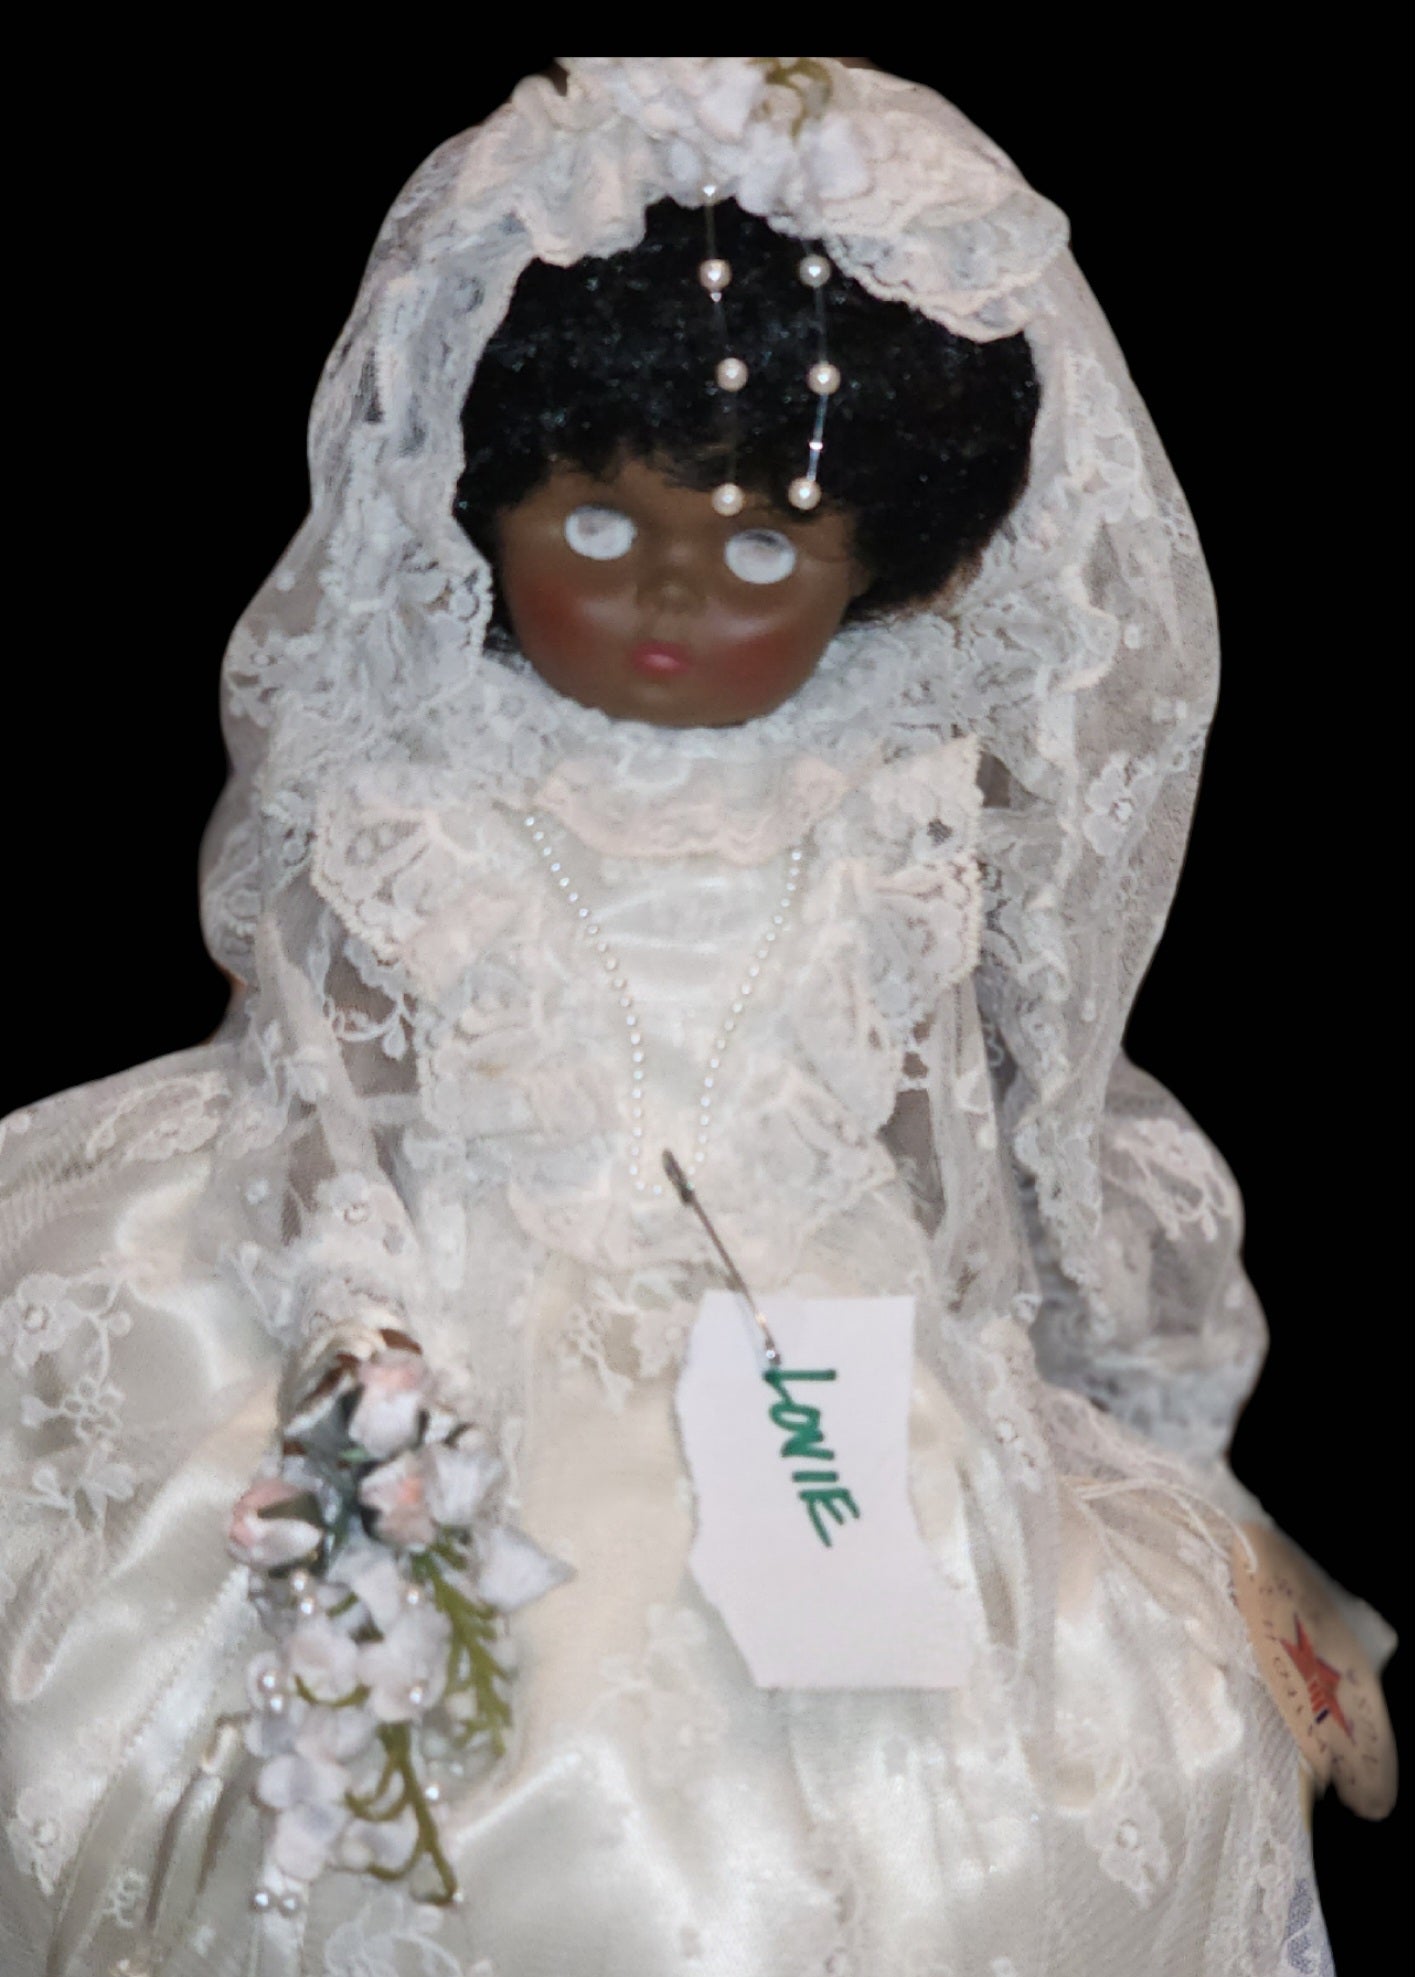 Lovie the Bride - Dark Jekyll & Mr. Hyde! Haunted Spirit Doll